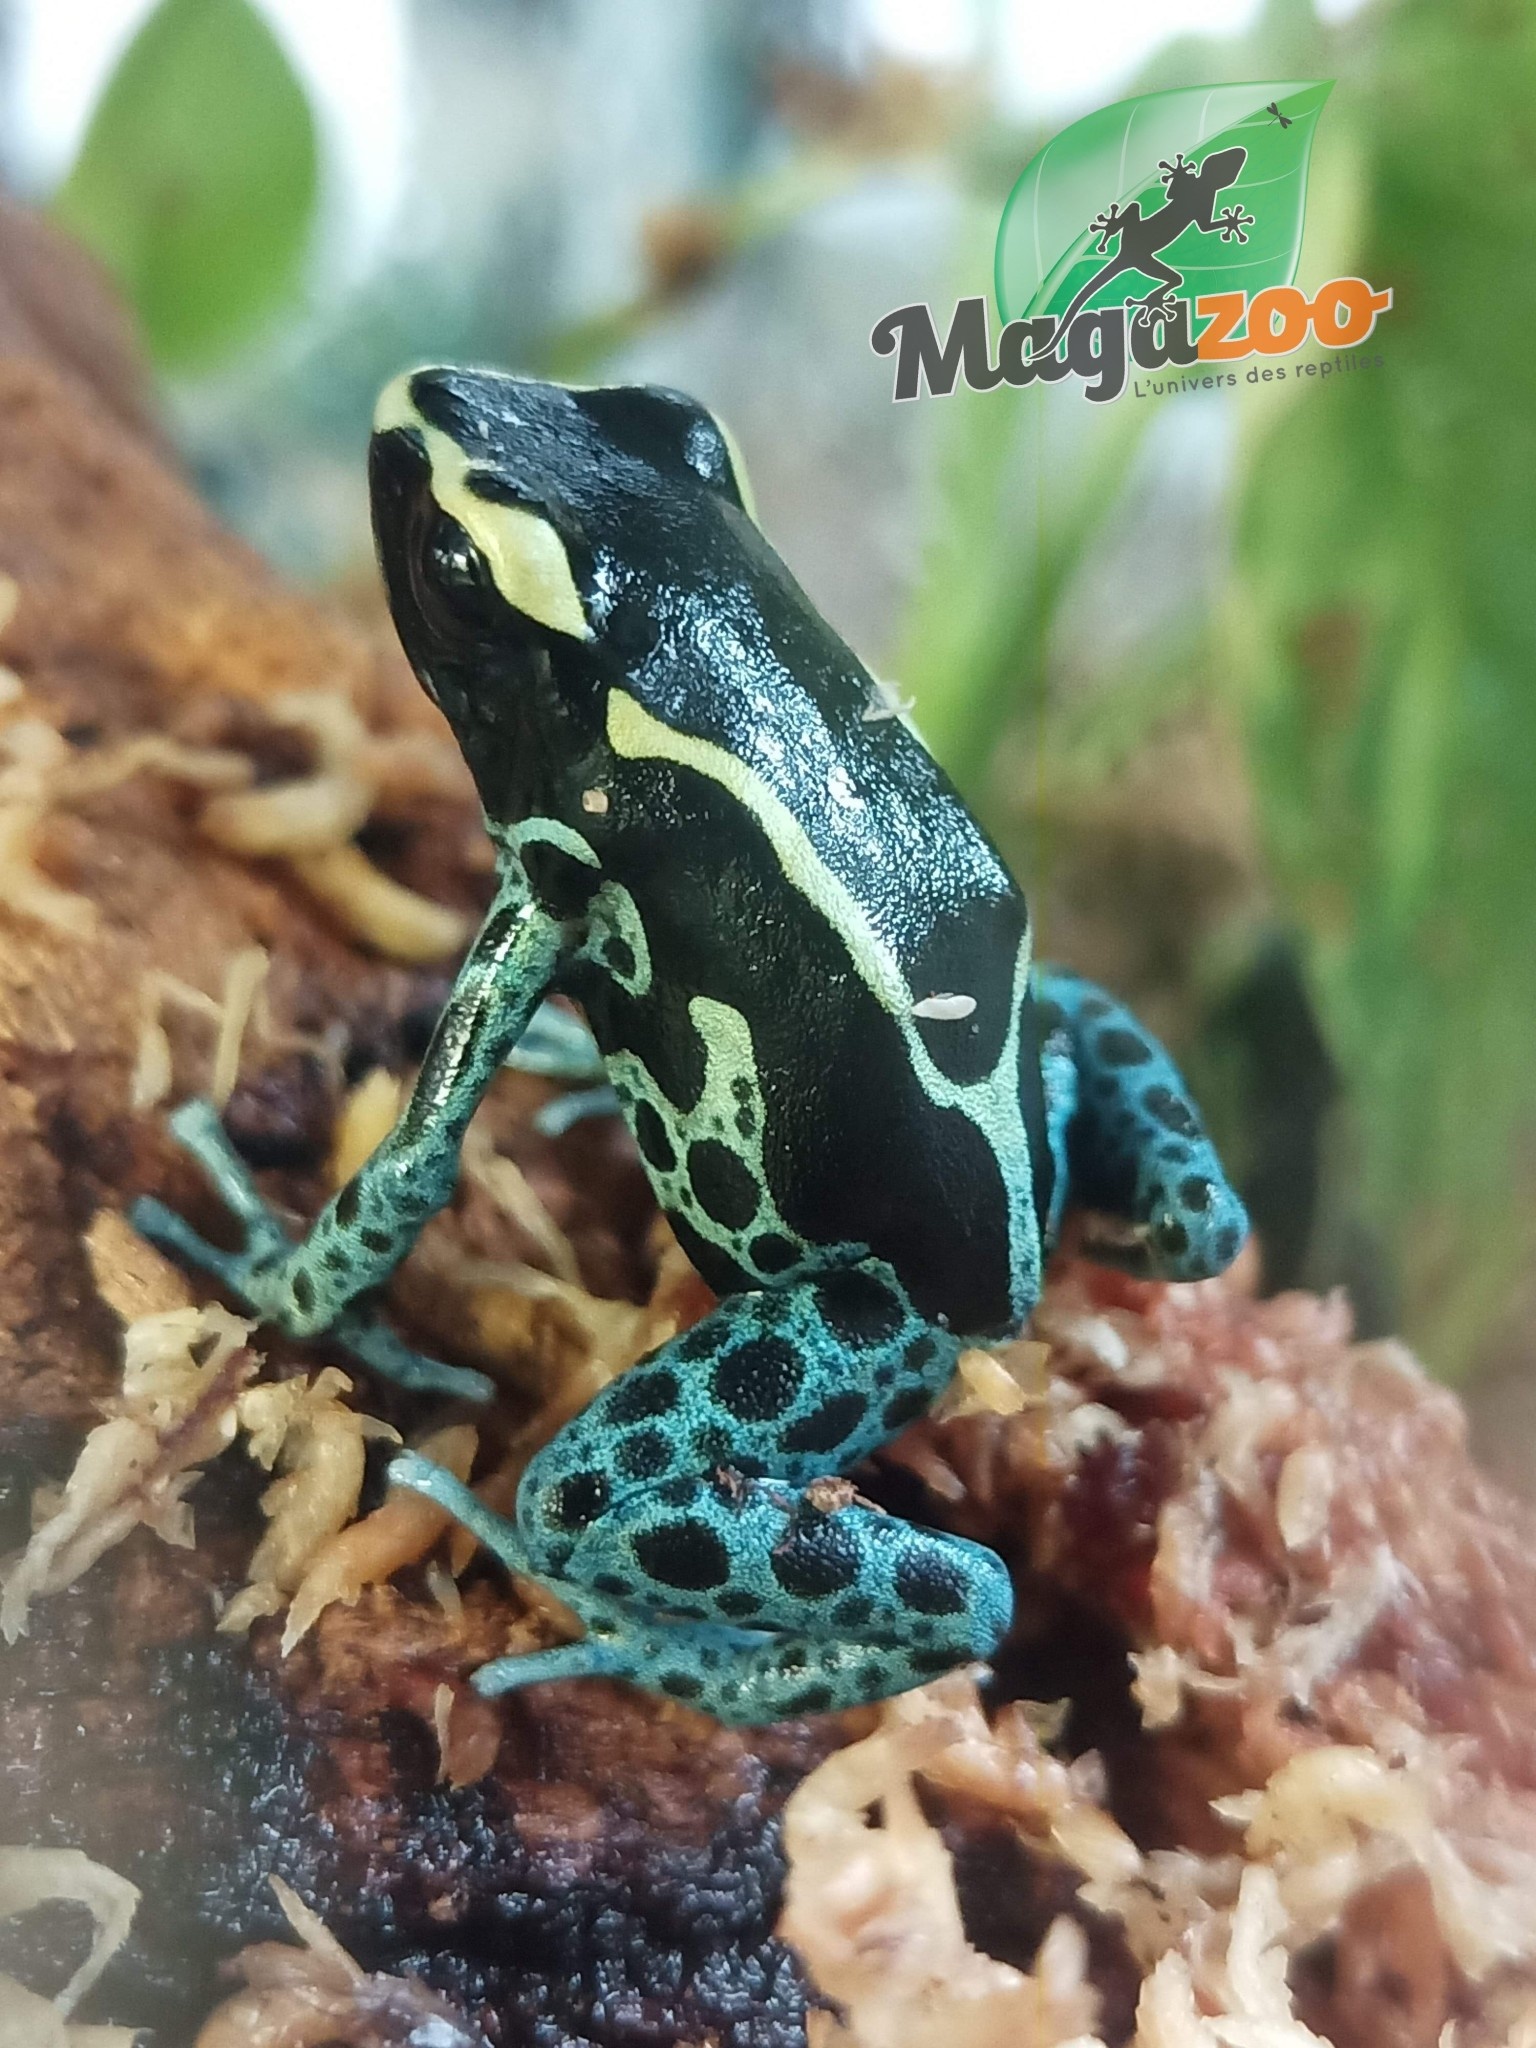 Magazoo Powder blue Poison Dart frog